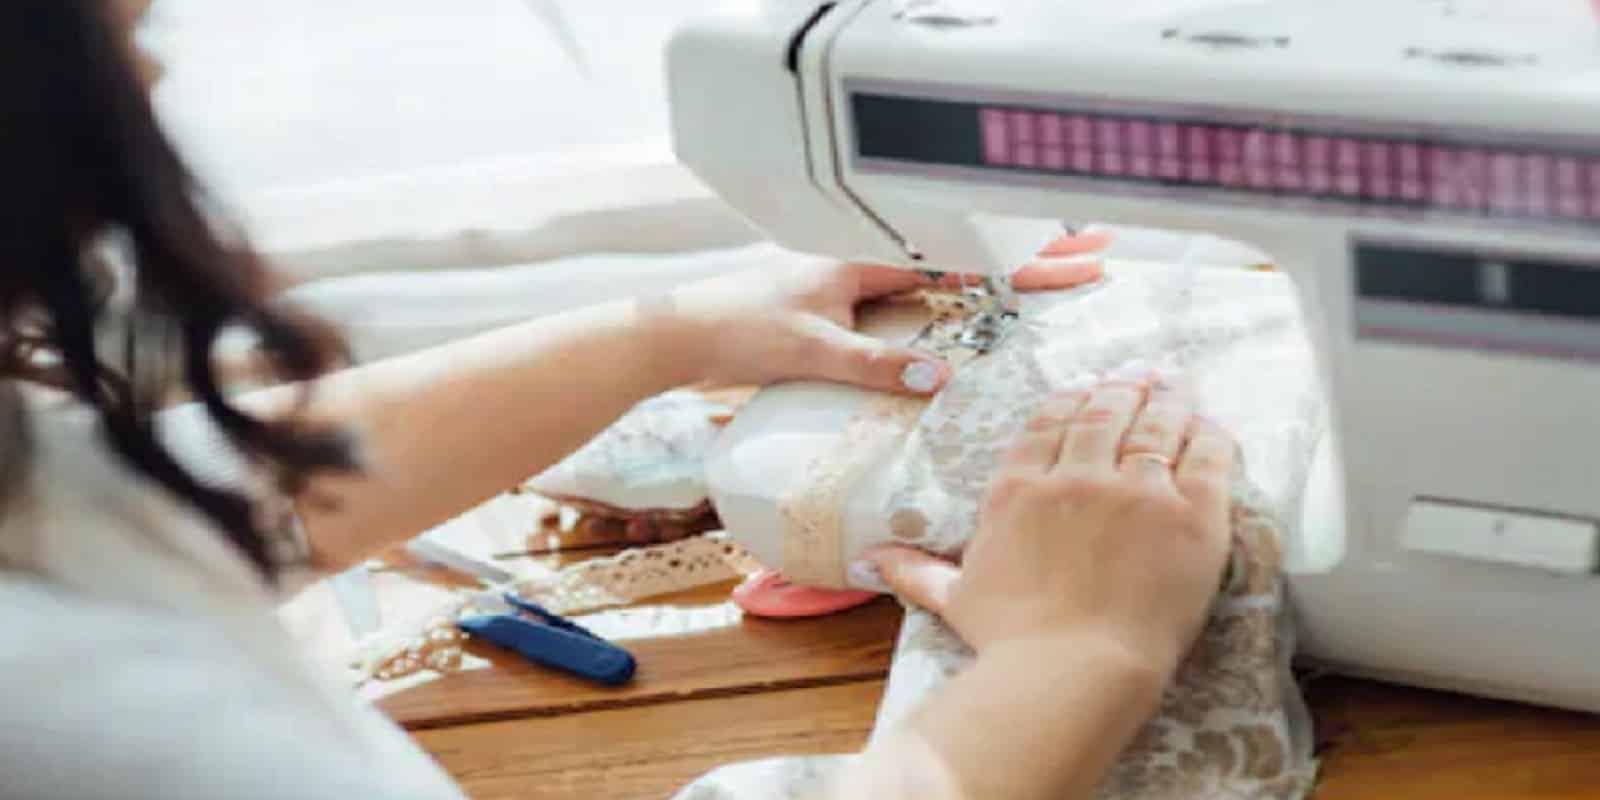 Sewing Machine Types